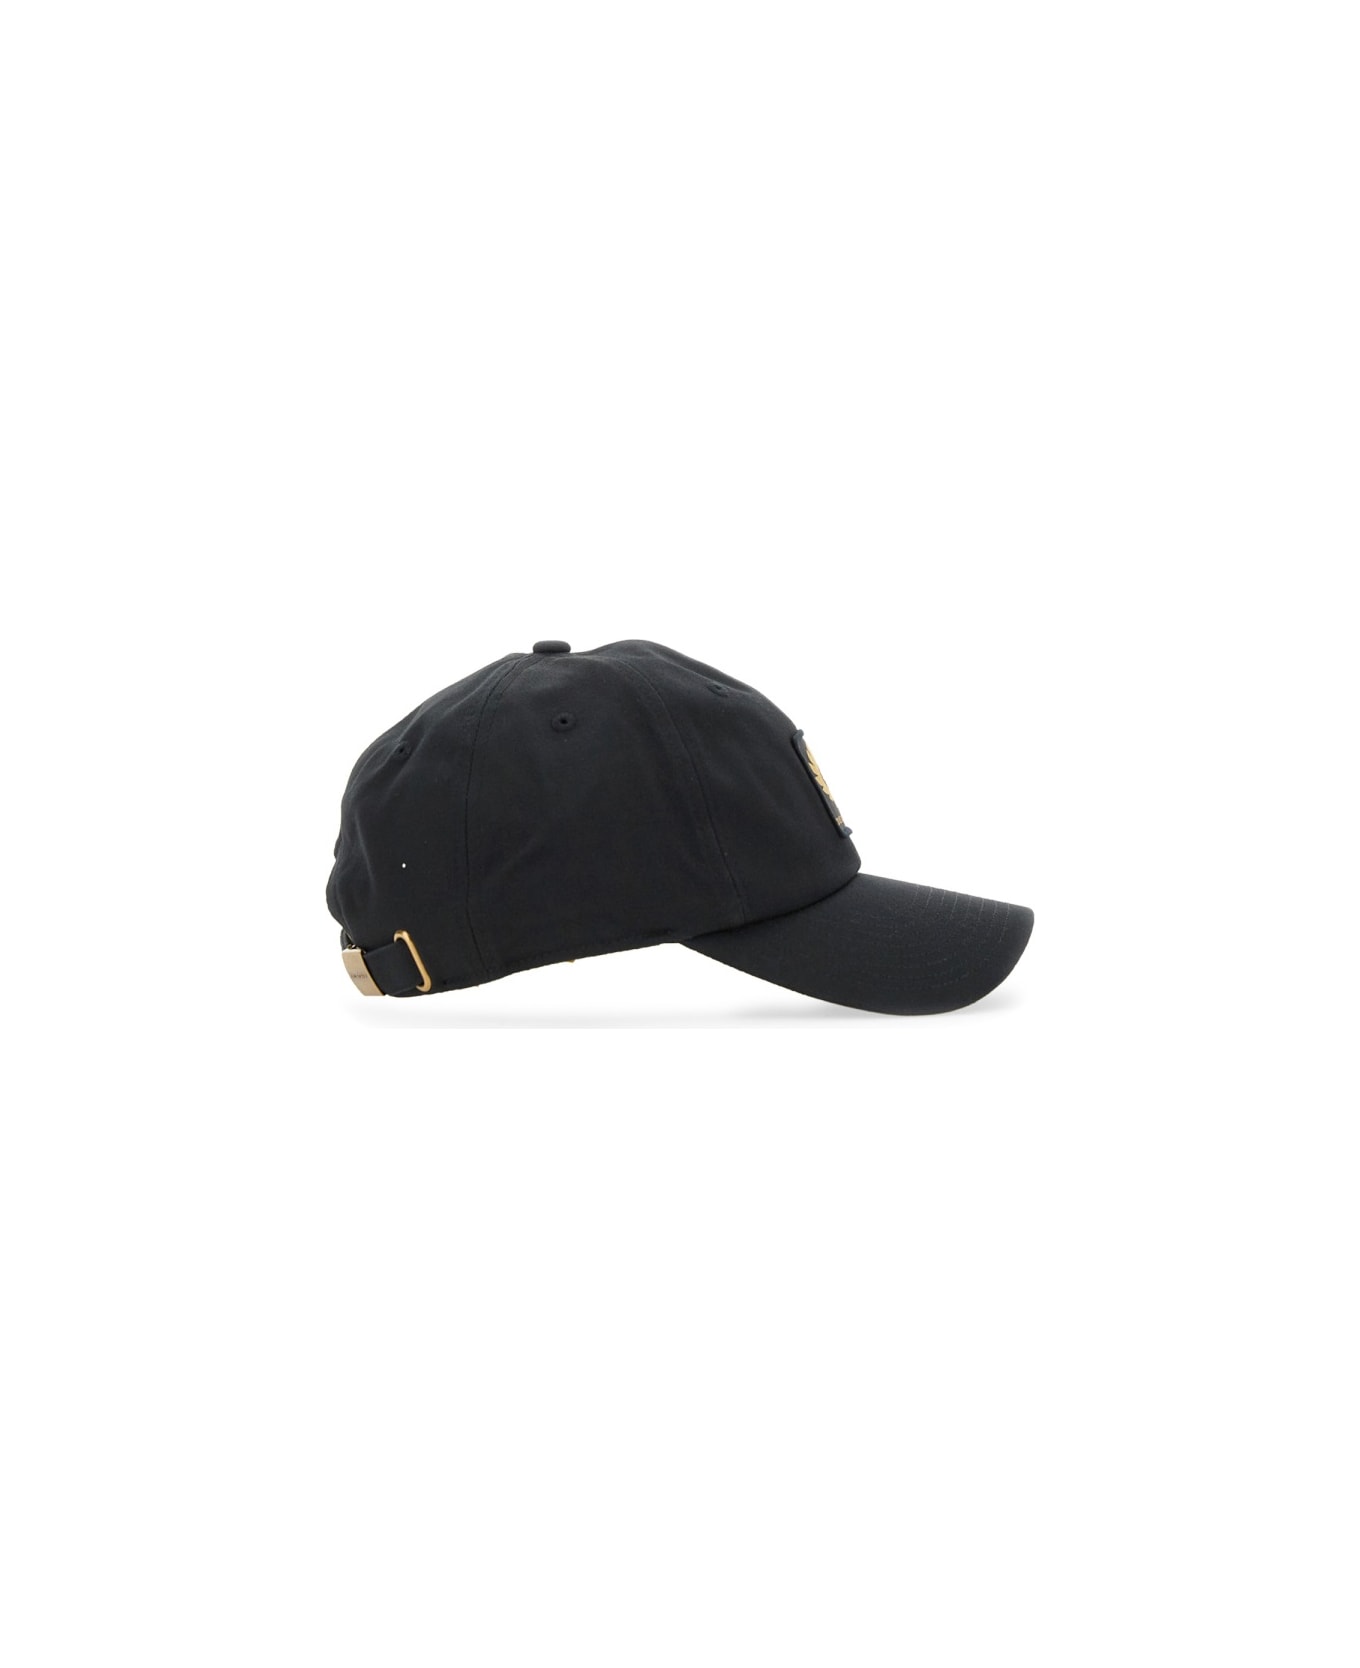 Belstaff Baseball PIK6 Hat With Logo - BLACK